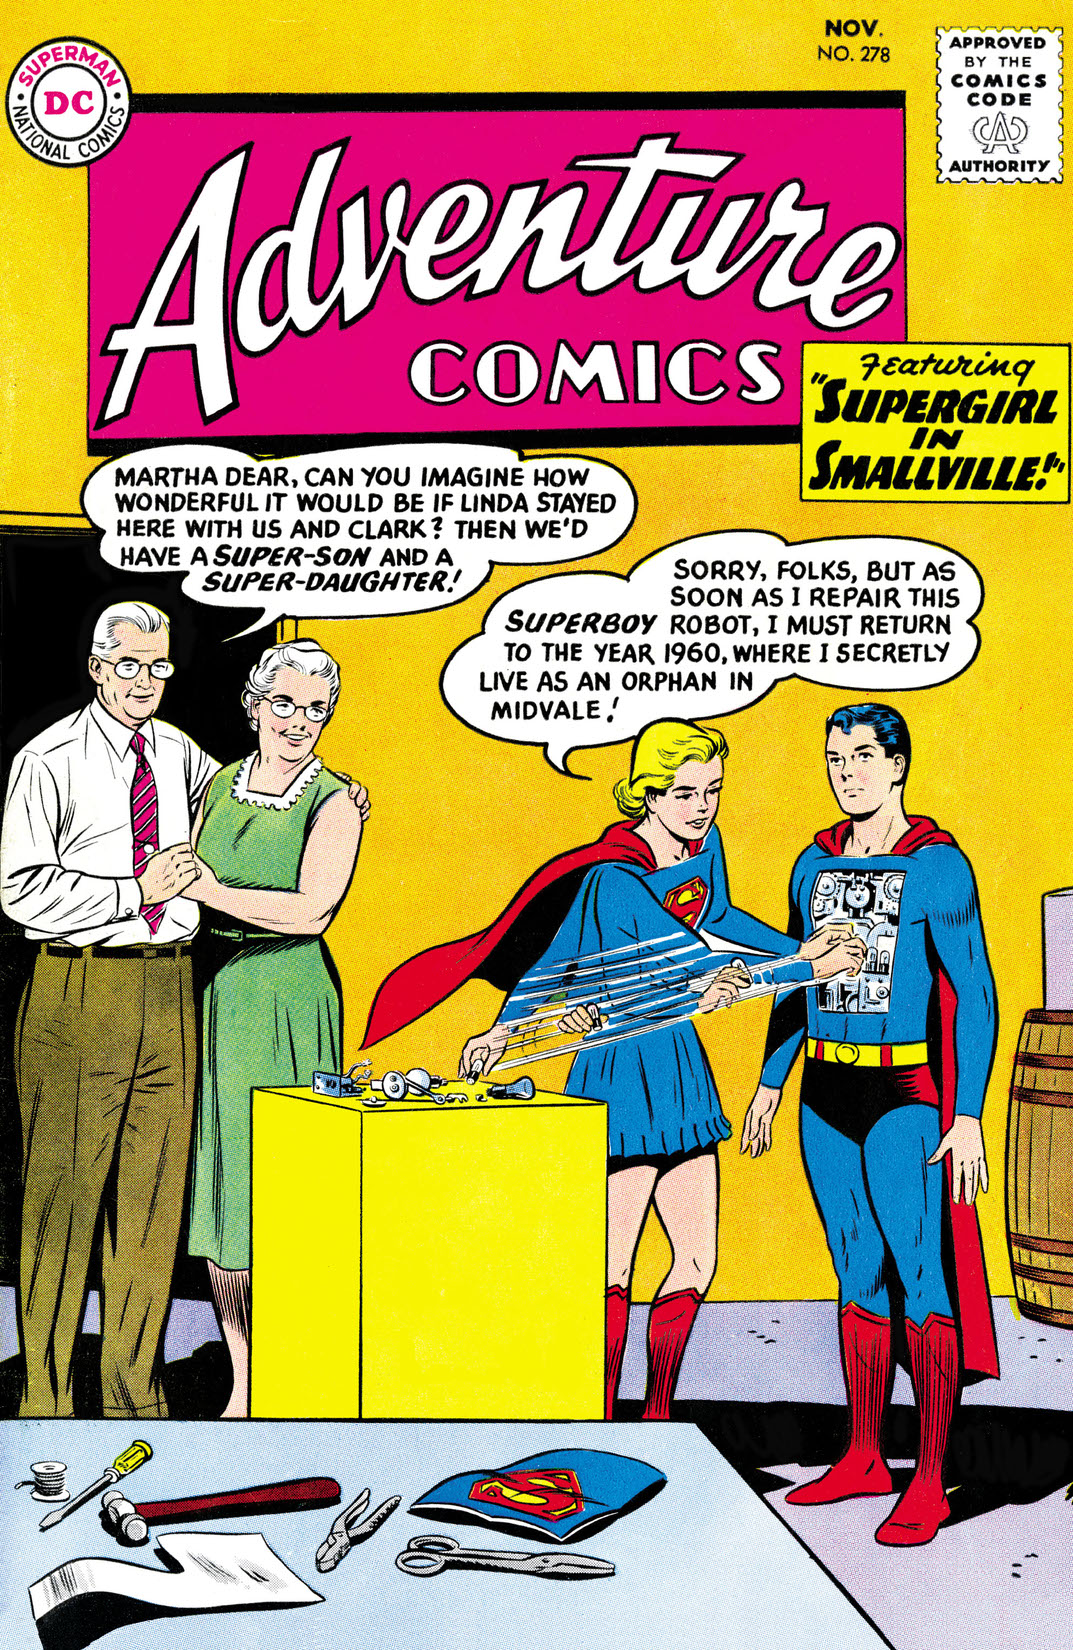 Adventure Comics (1938-) #278 preview images